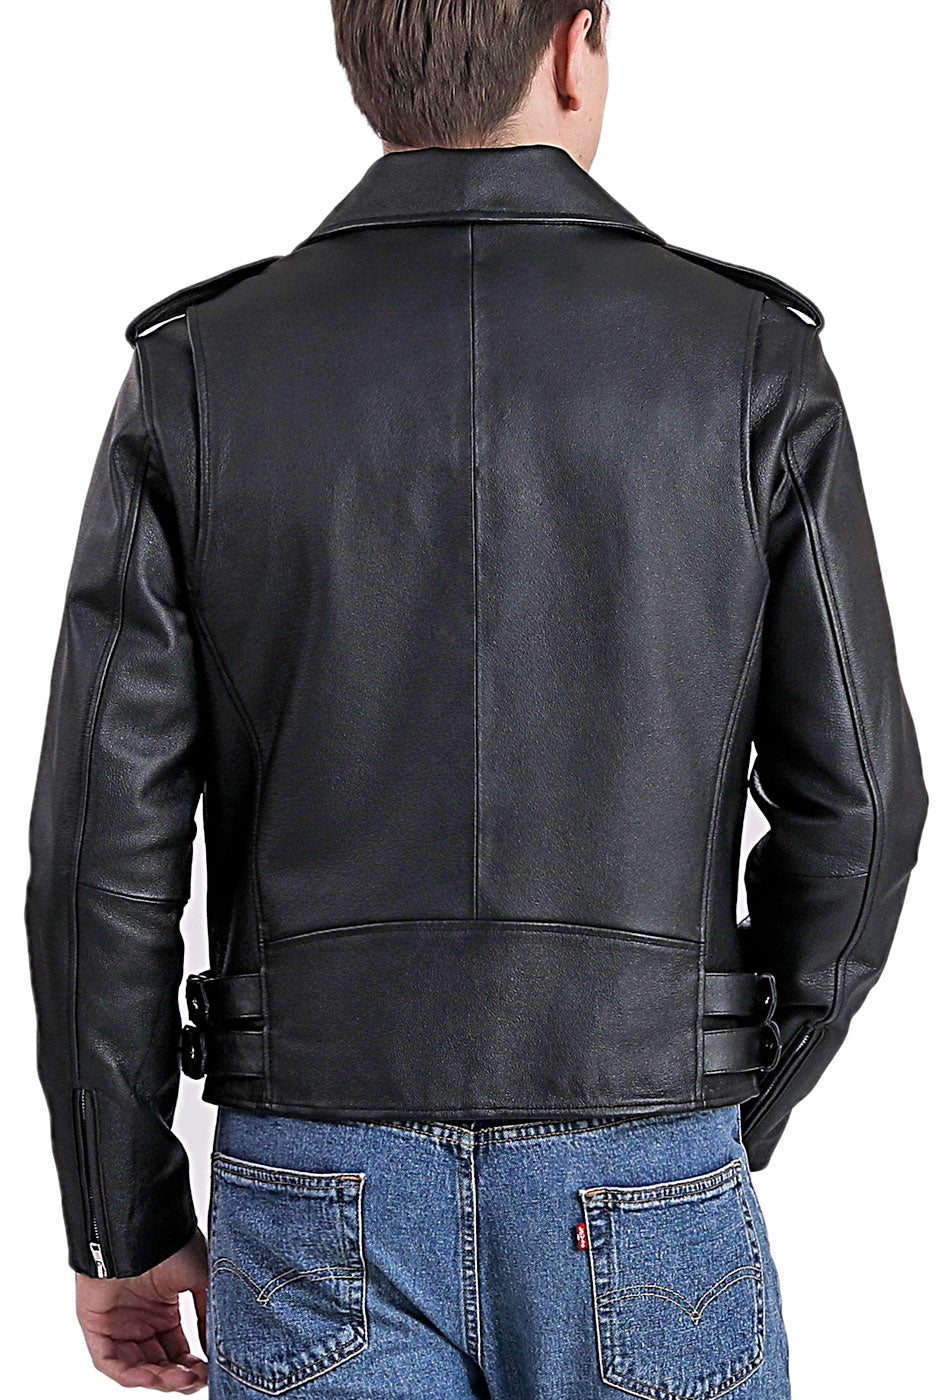 BGSD Men City Cowhide Leather Motorcycle Jacket